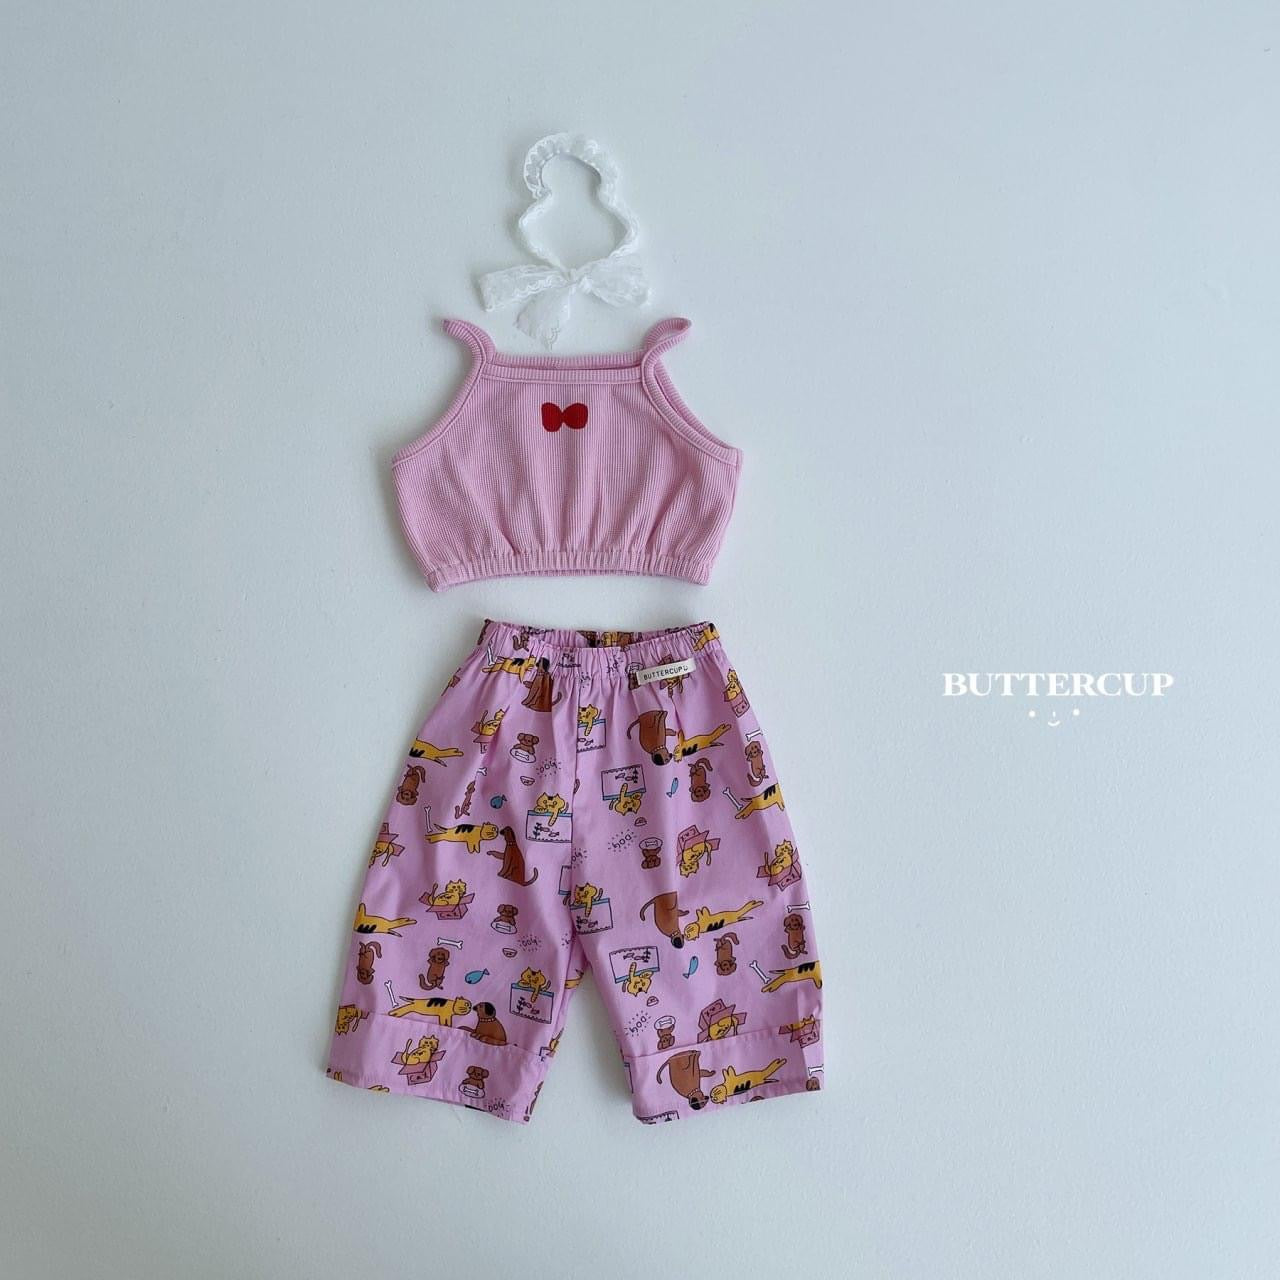 Buttercup 鬆餅蝴蝶結短版吊帶上衣 (kids 80-120cm)